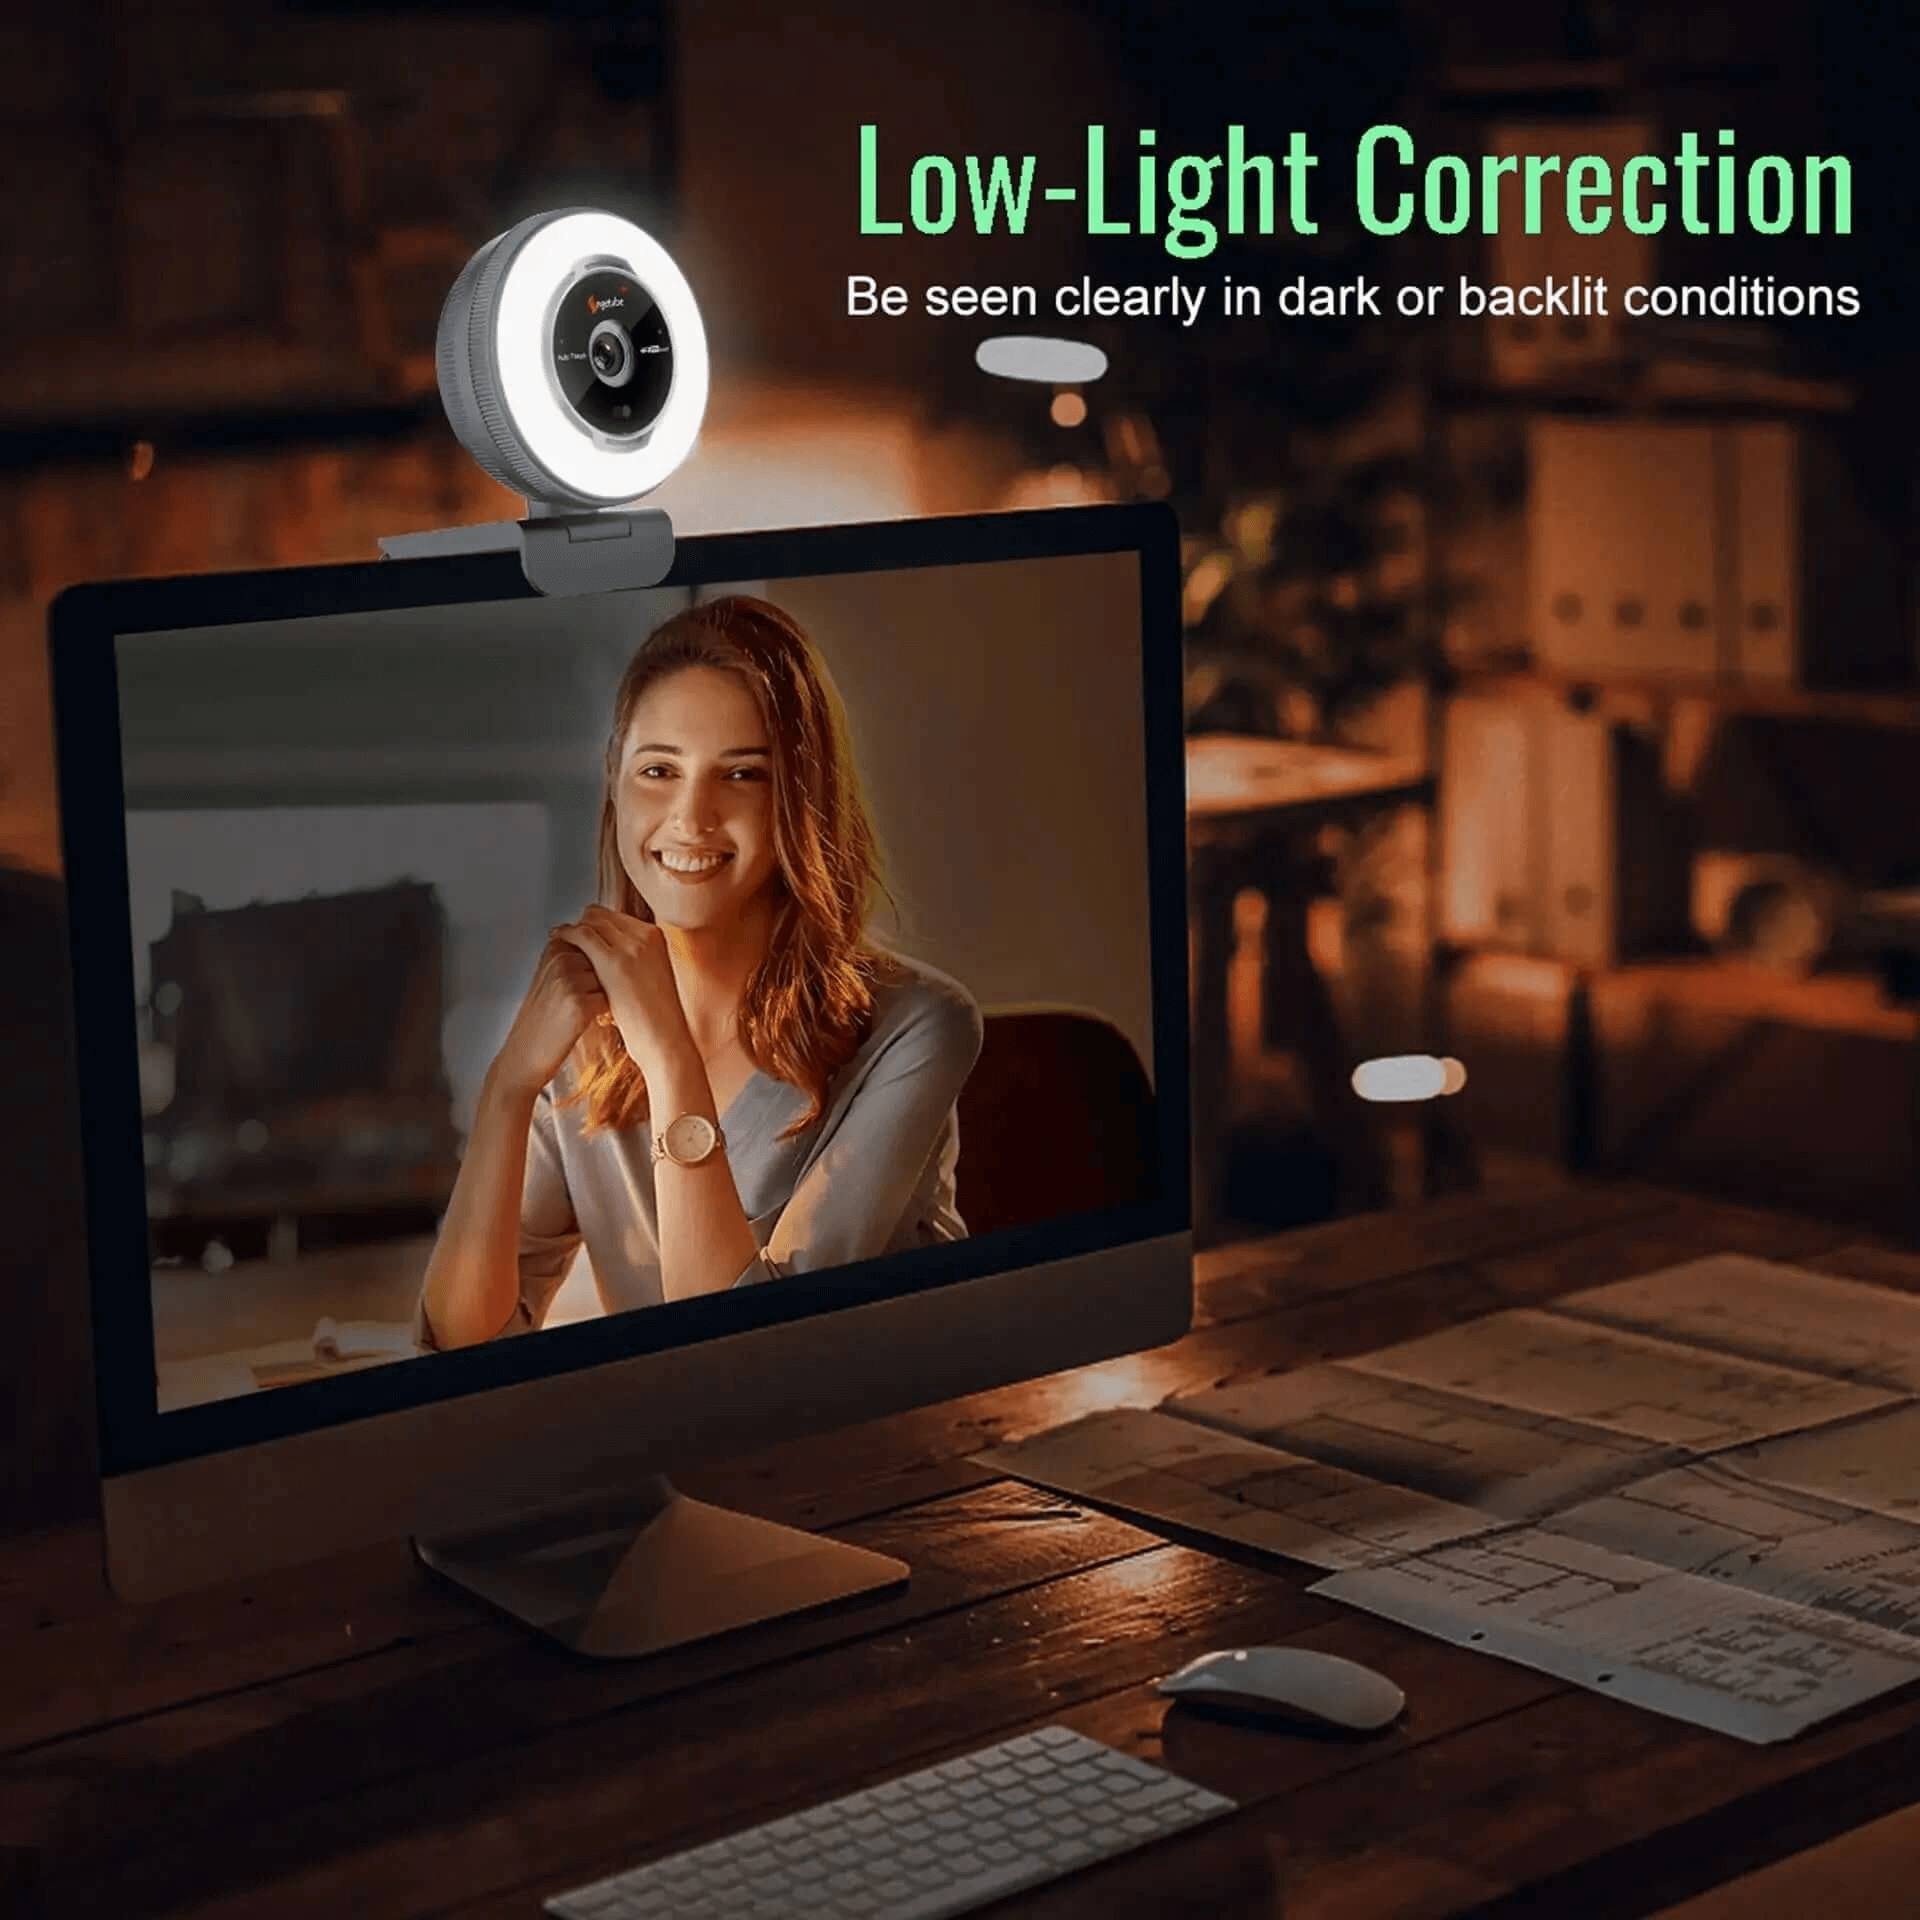 Low-Light Correction